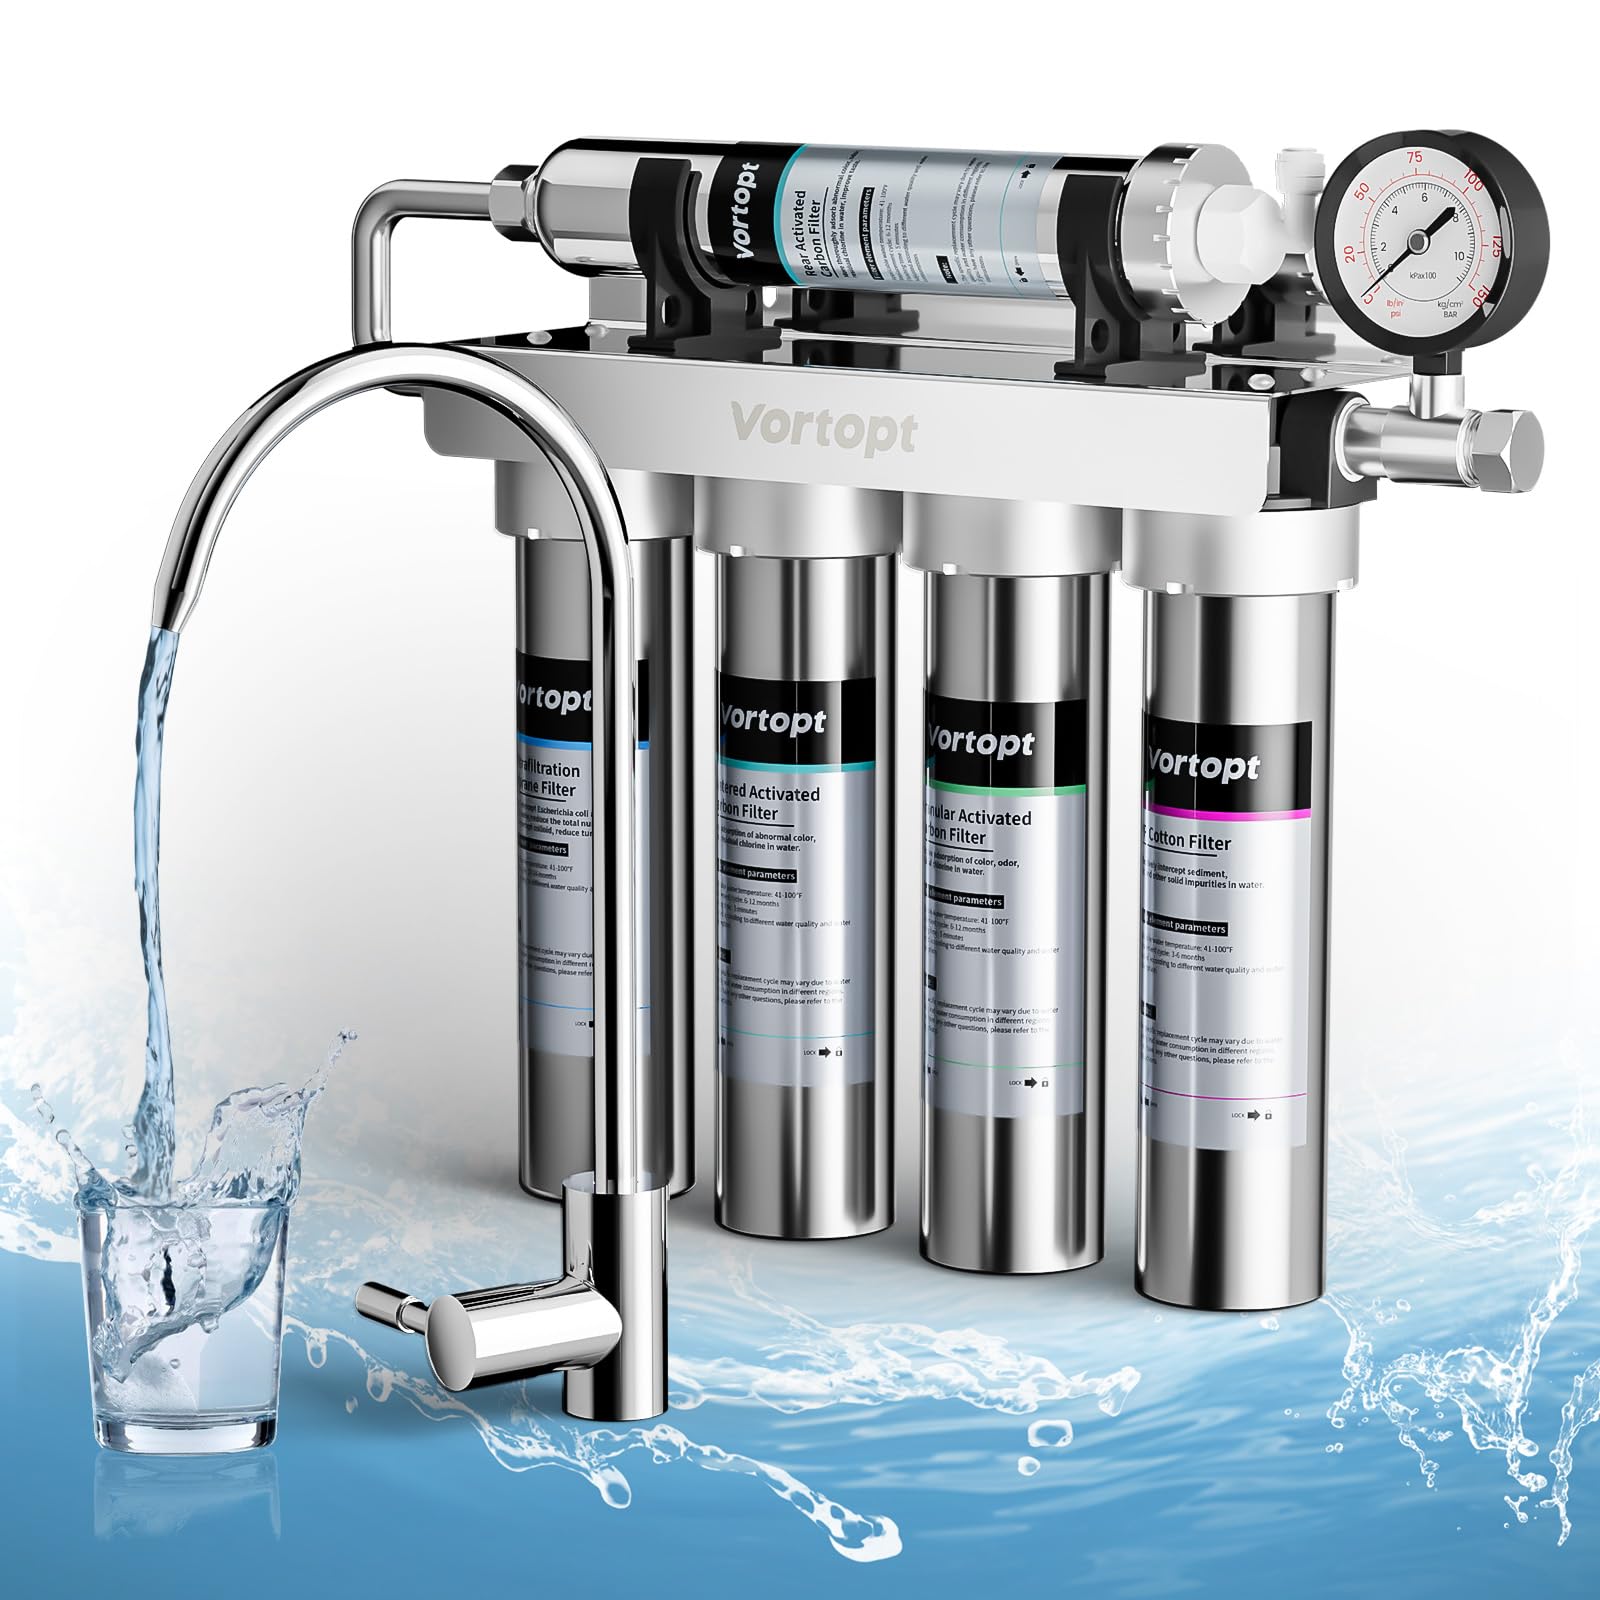 Under Sink Water Filter - Stainless Steel Water Filter System - U1-ST